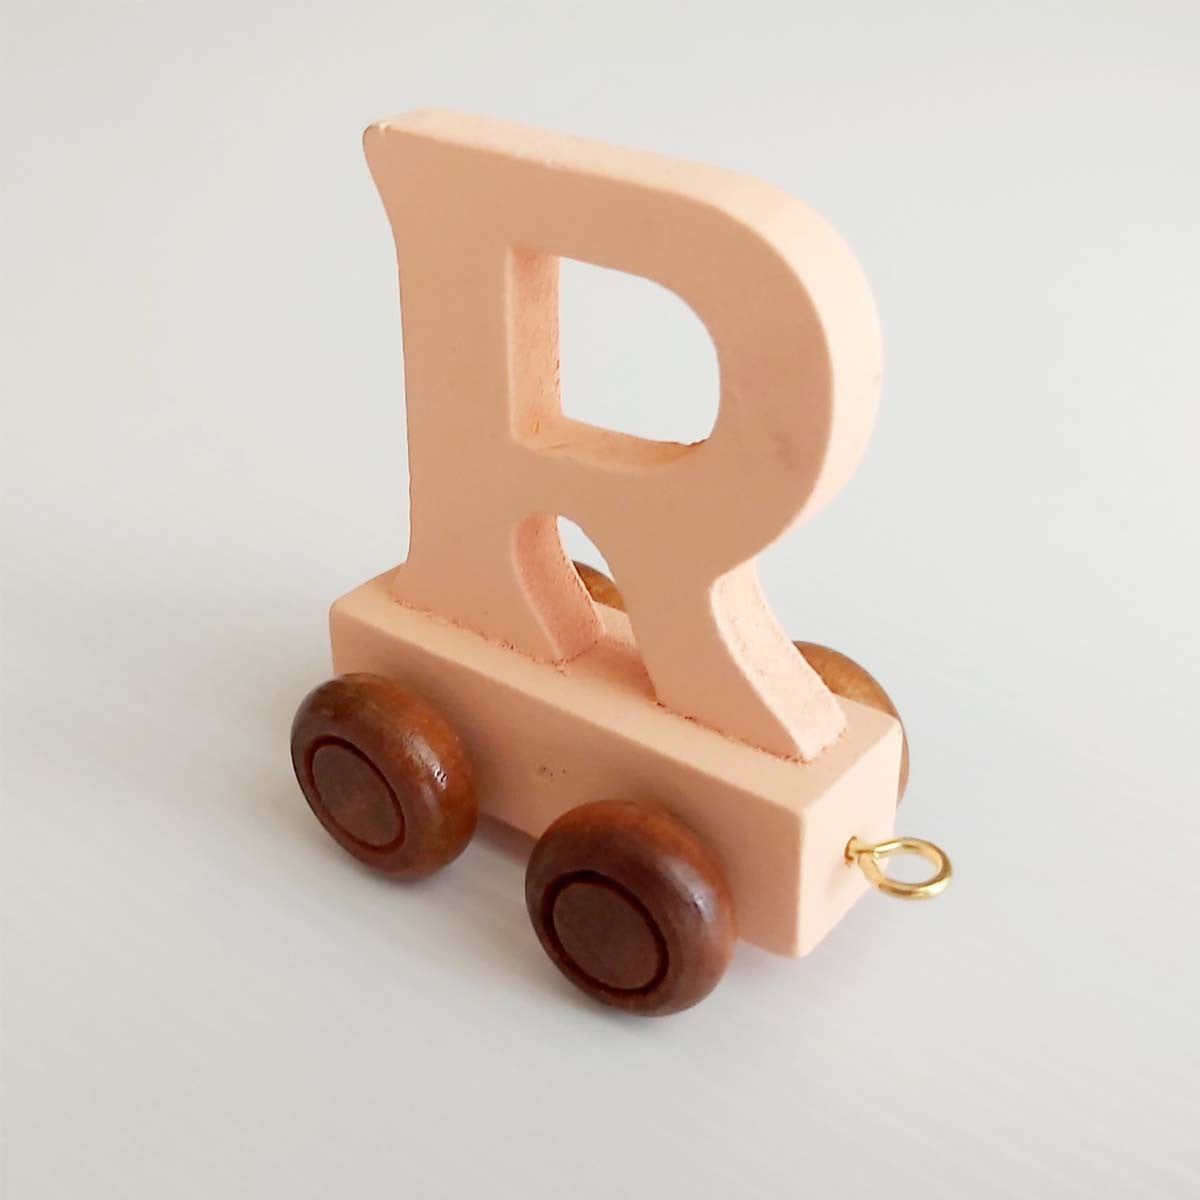 Wooden Coloured Letter R